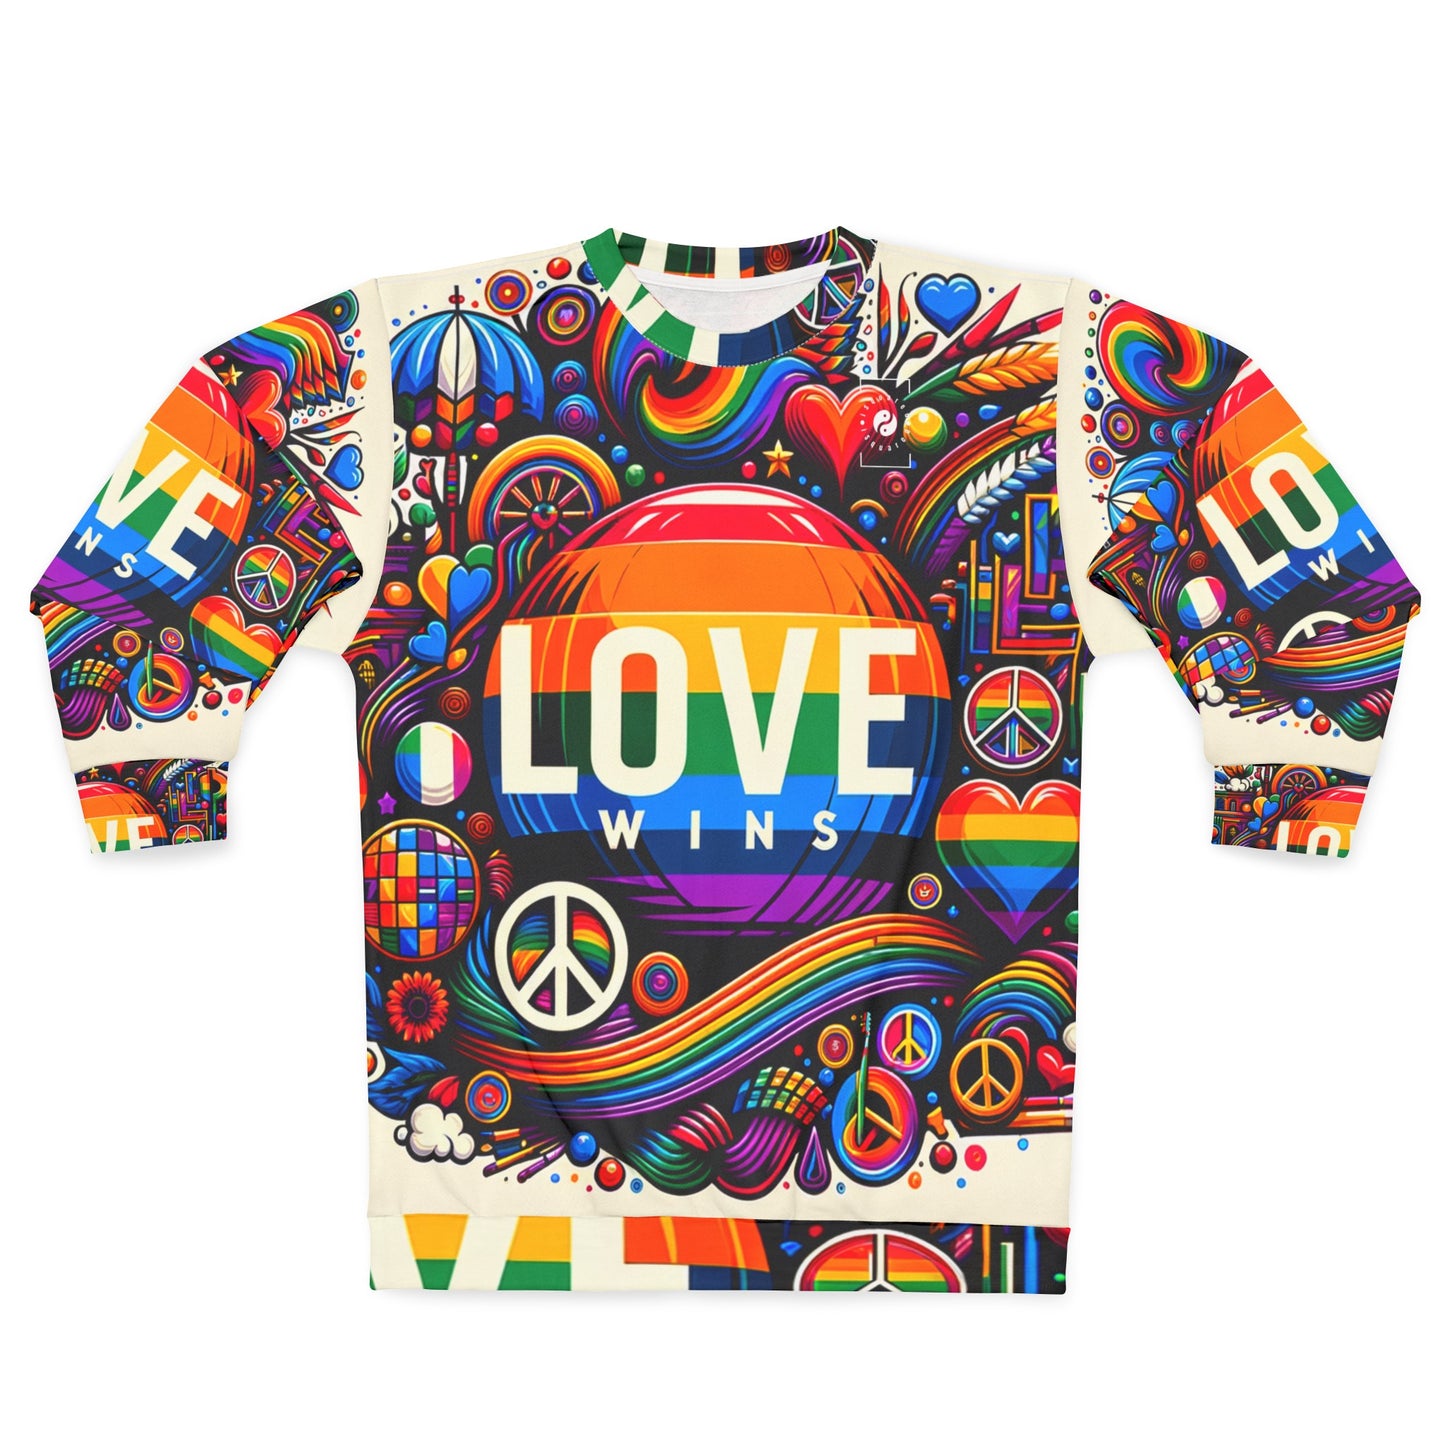 LOVE WINS - Unisex Sweatshirt